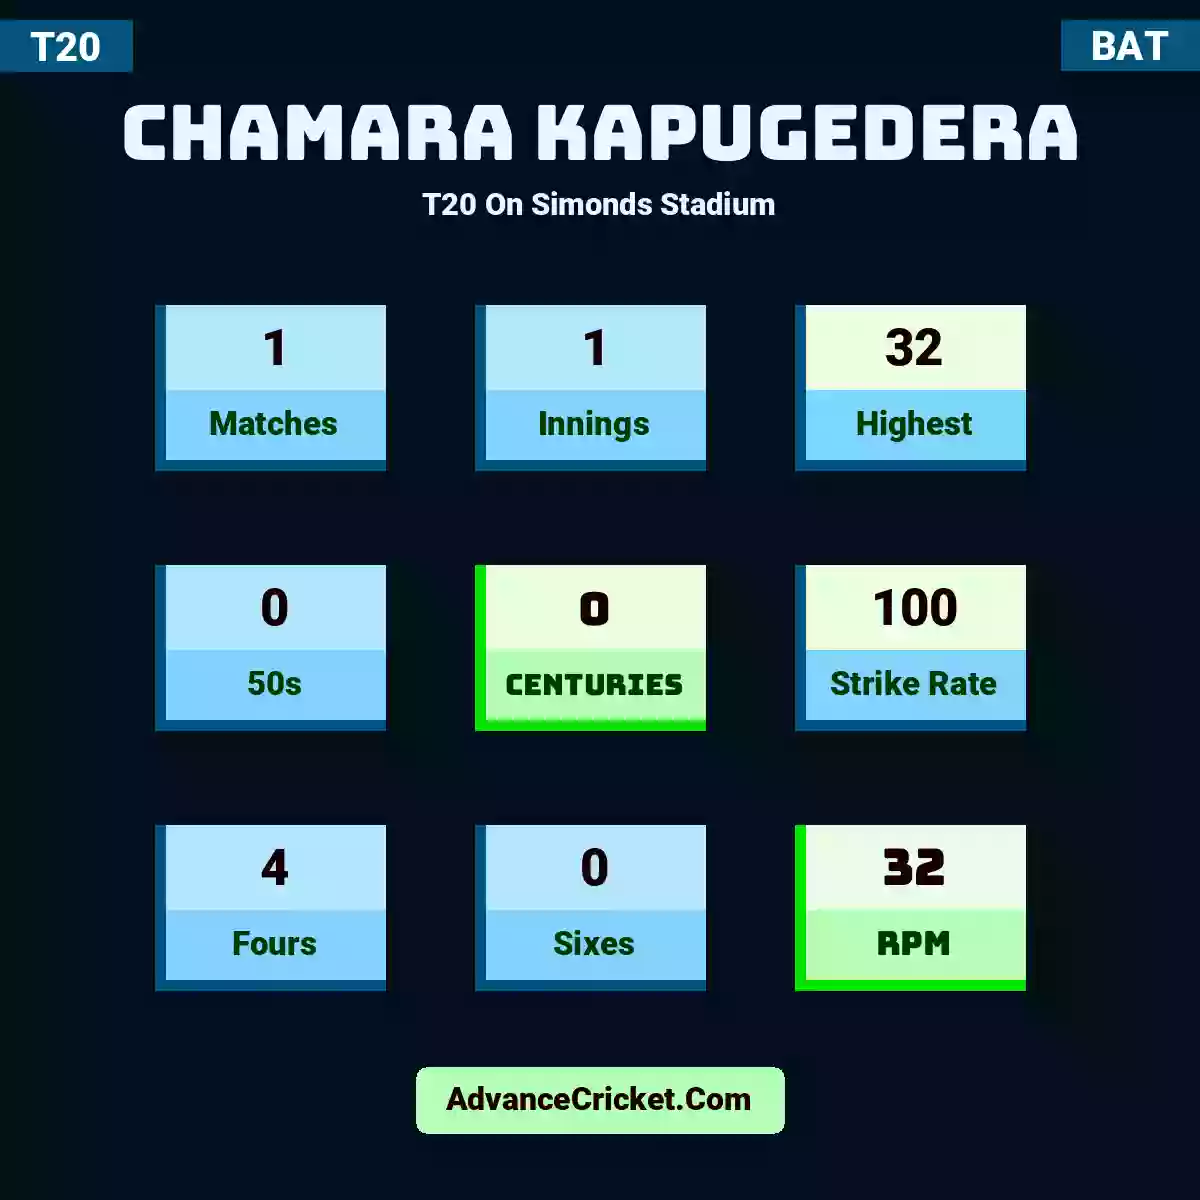 Chamara Kapugedera T20  On Simonds Stadium, Chamara Kapugedera played 1 matches, scored 32 runs as highest, 0 half-centuries, and 0 centuries, with a strike rate of 100. C.Kapugedera hit 4 fours and 0 sixes, with an RPM of 32.